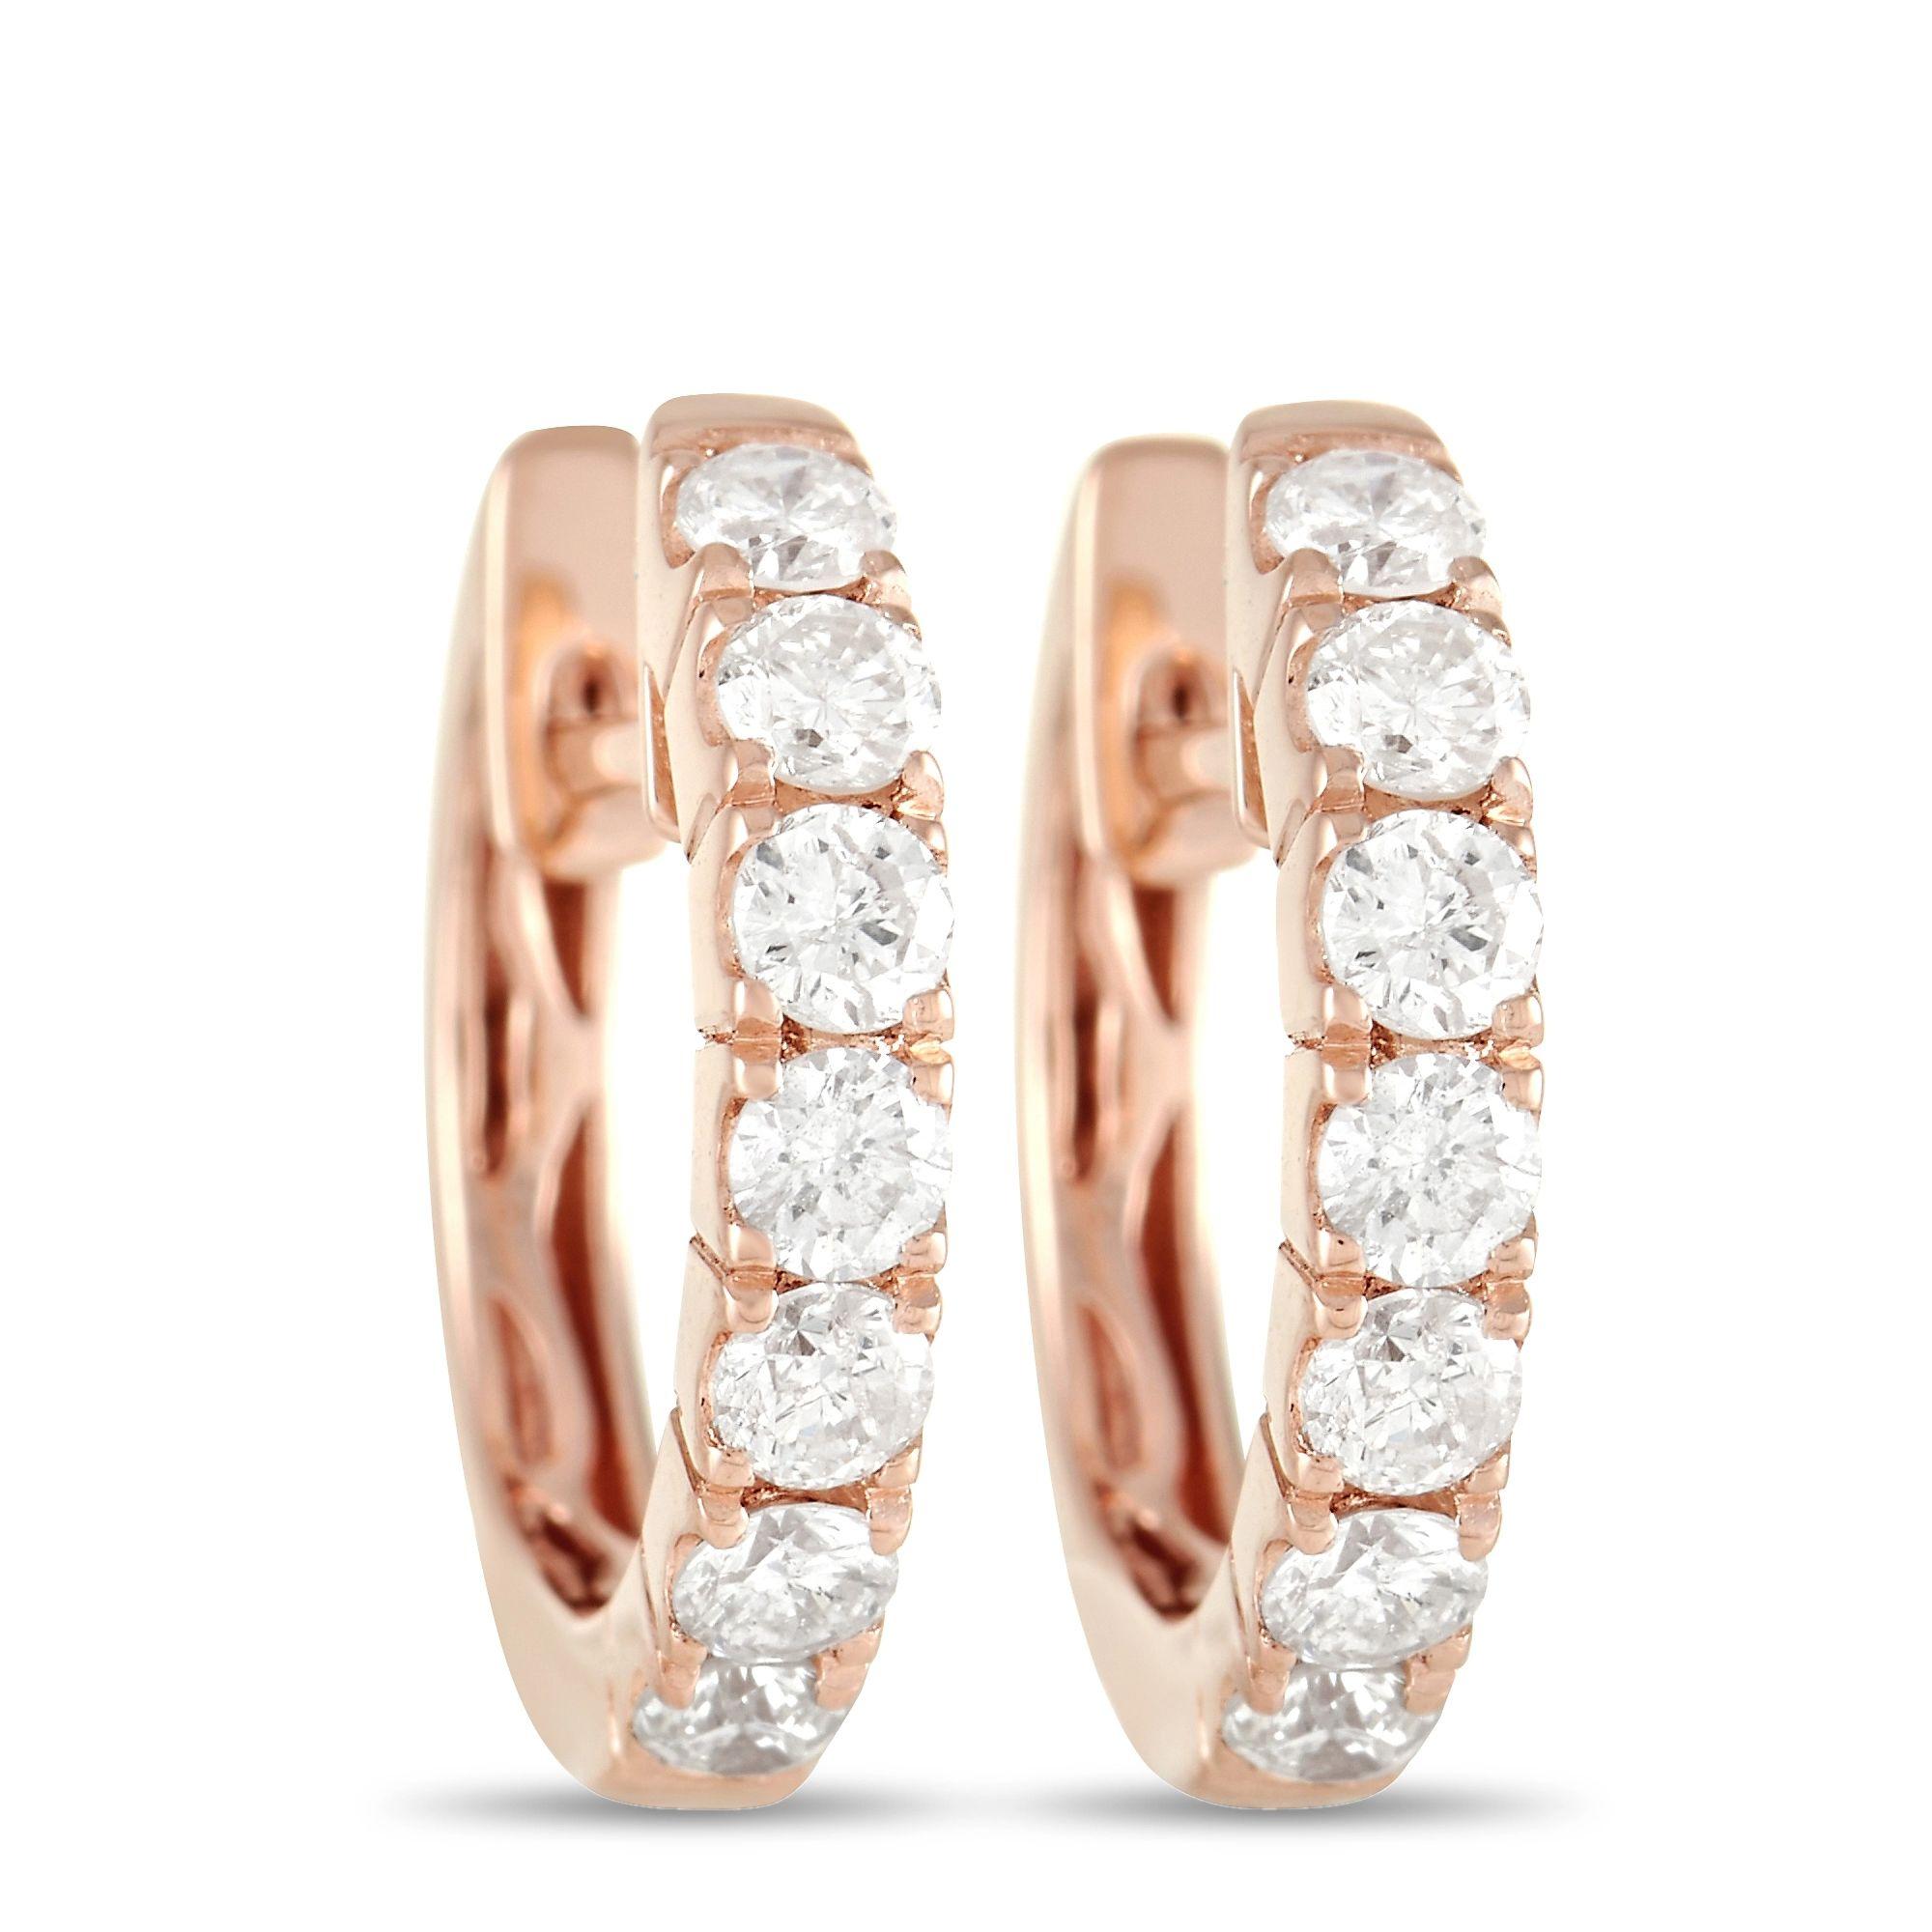 LB Exklusive 14K Roségold-Ohrringe mit 0,59 Karat Diamanten im Angebot